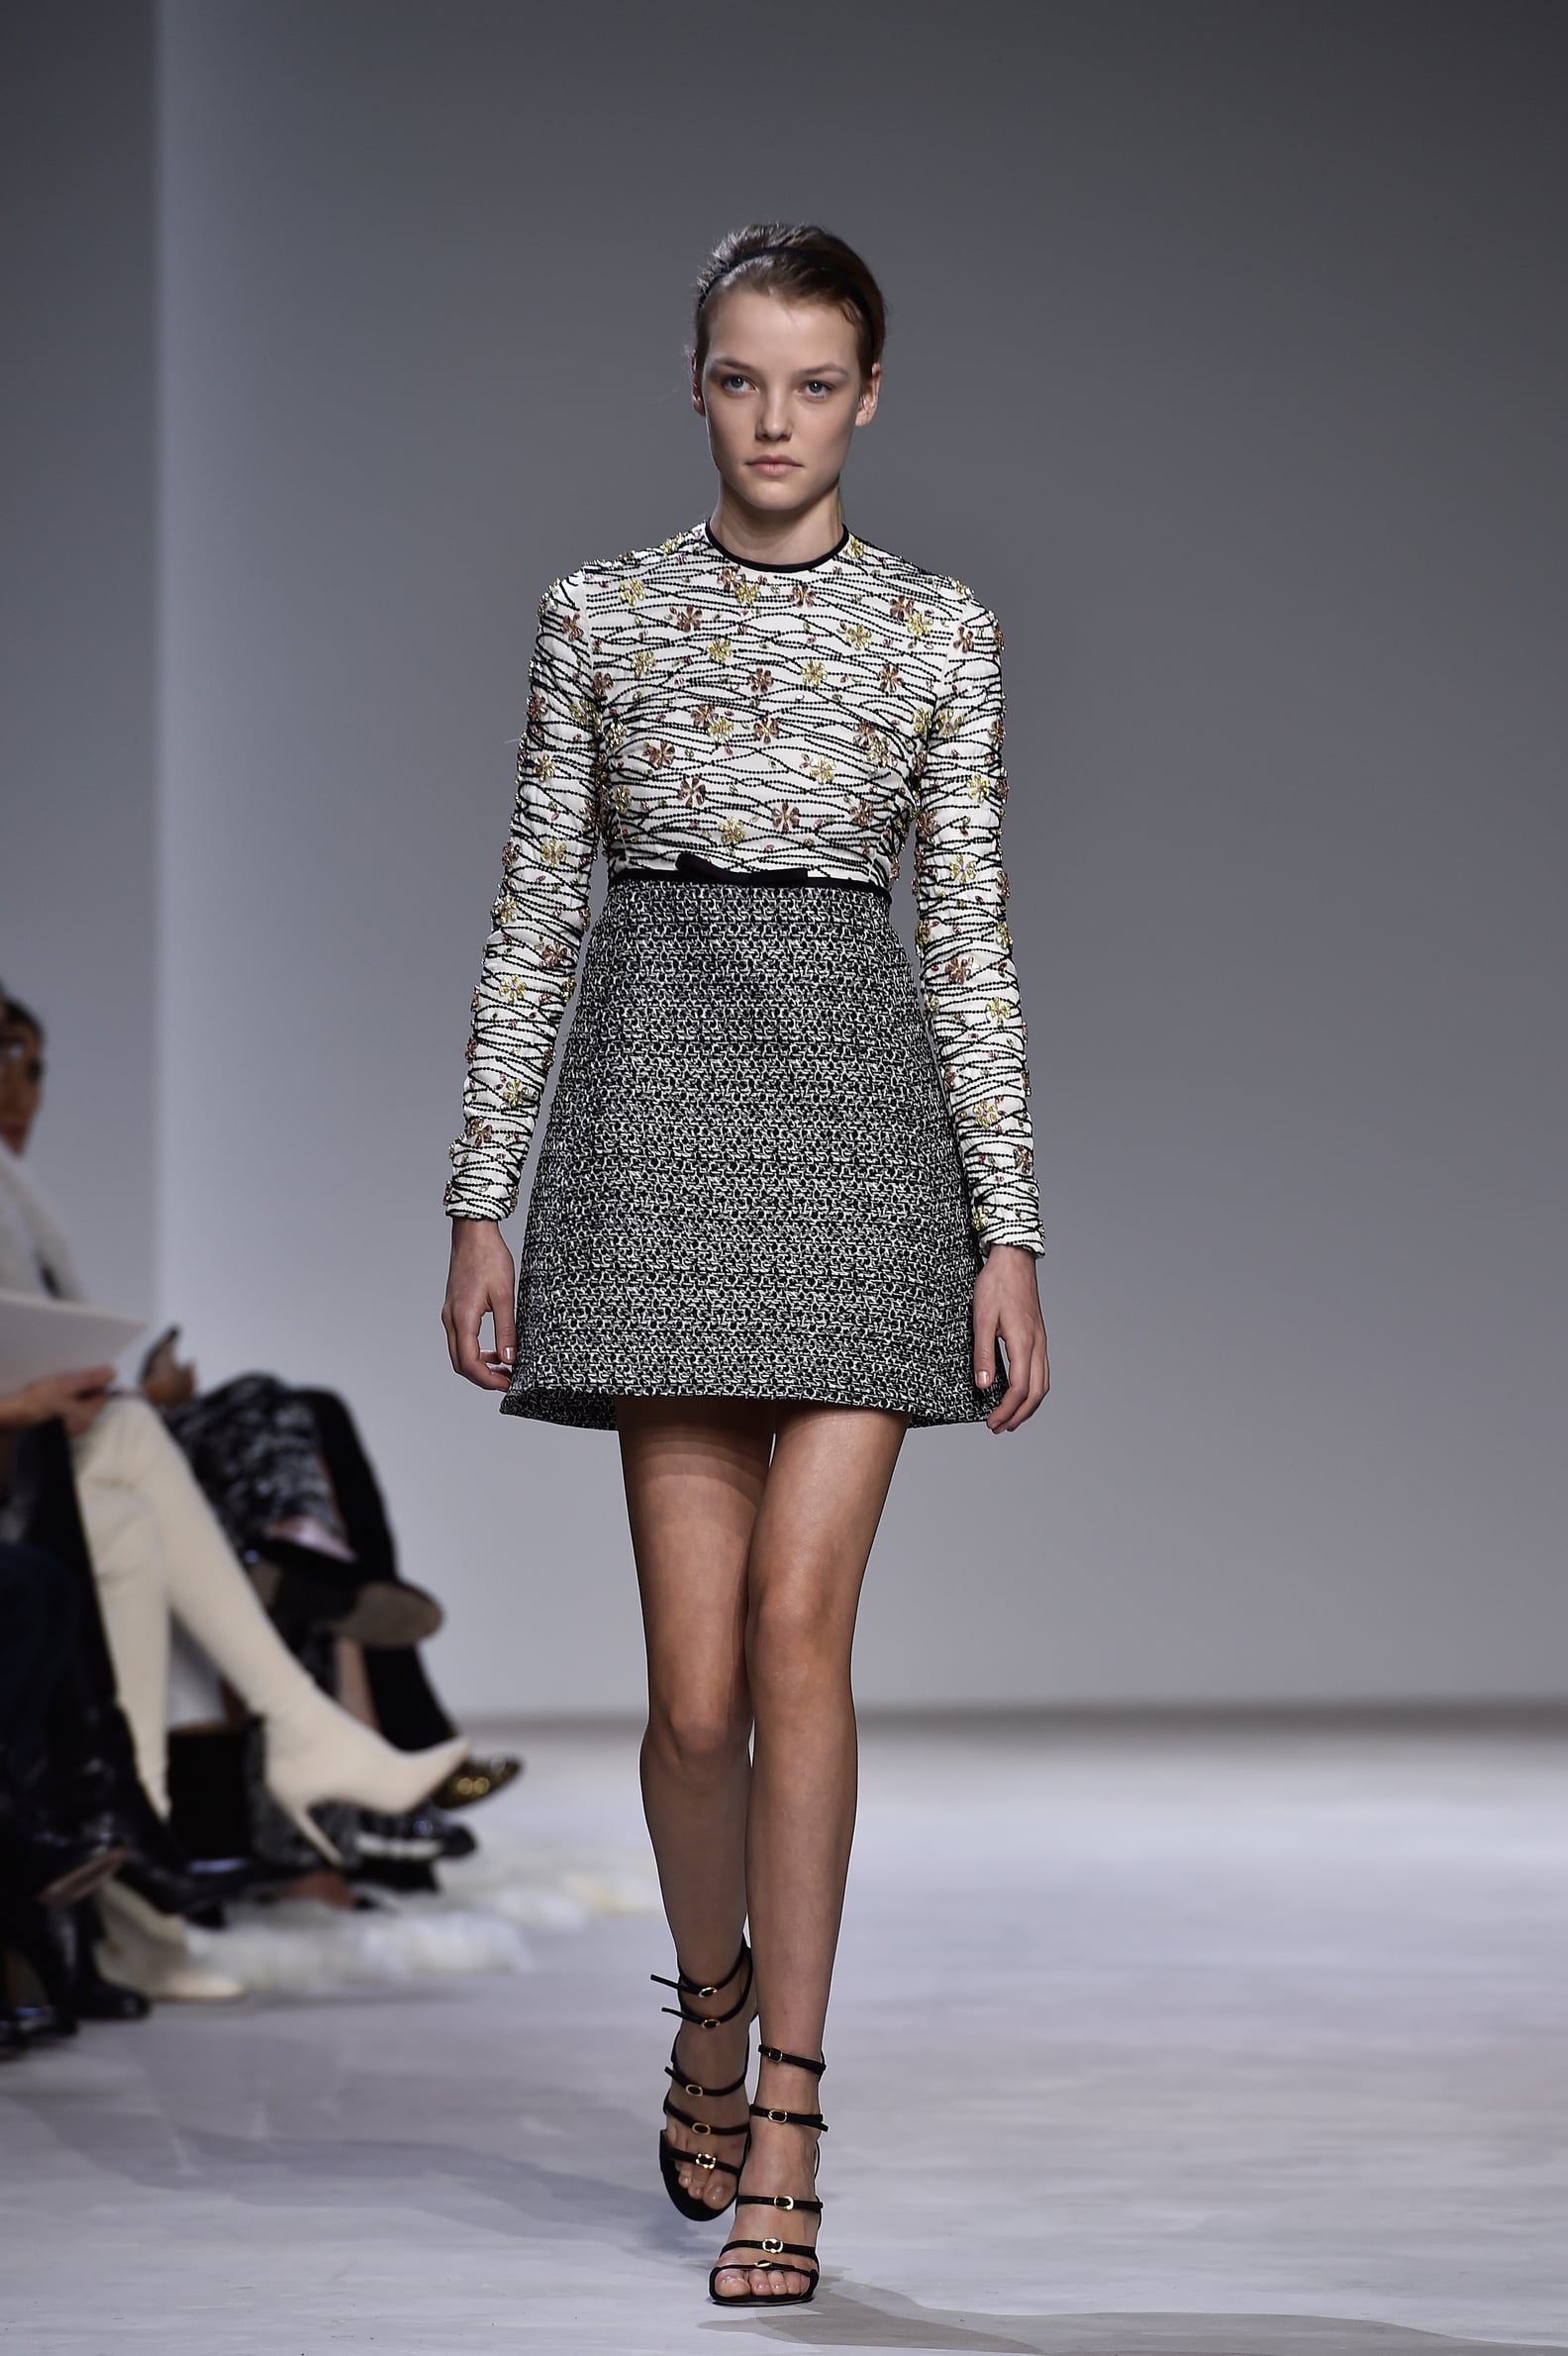 Giambattista Valli Couture Spring 2016 | POPSUGAR Fashion